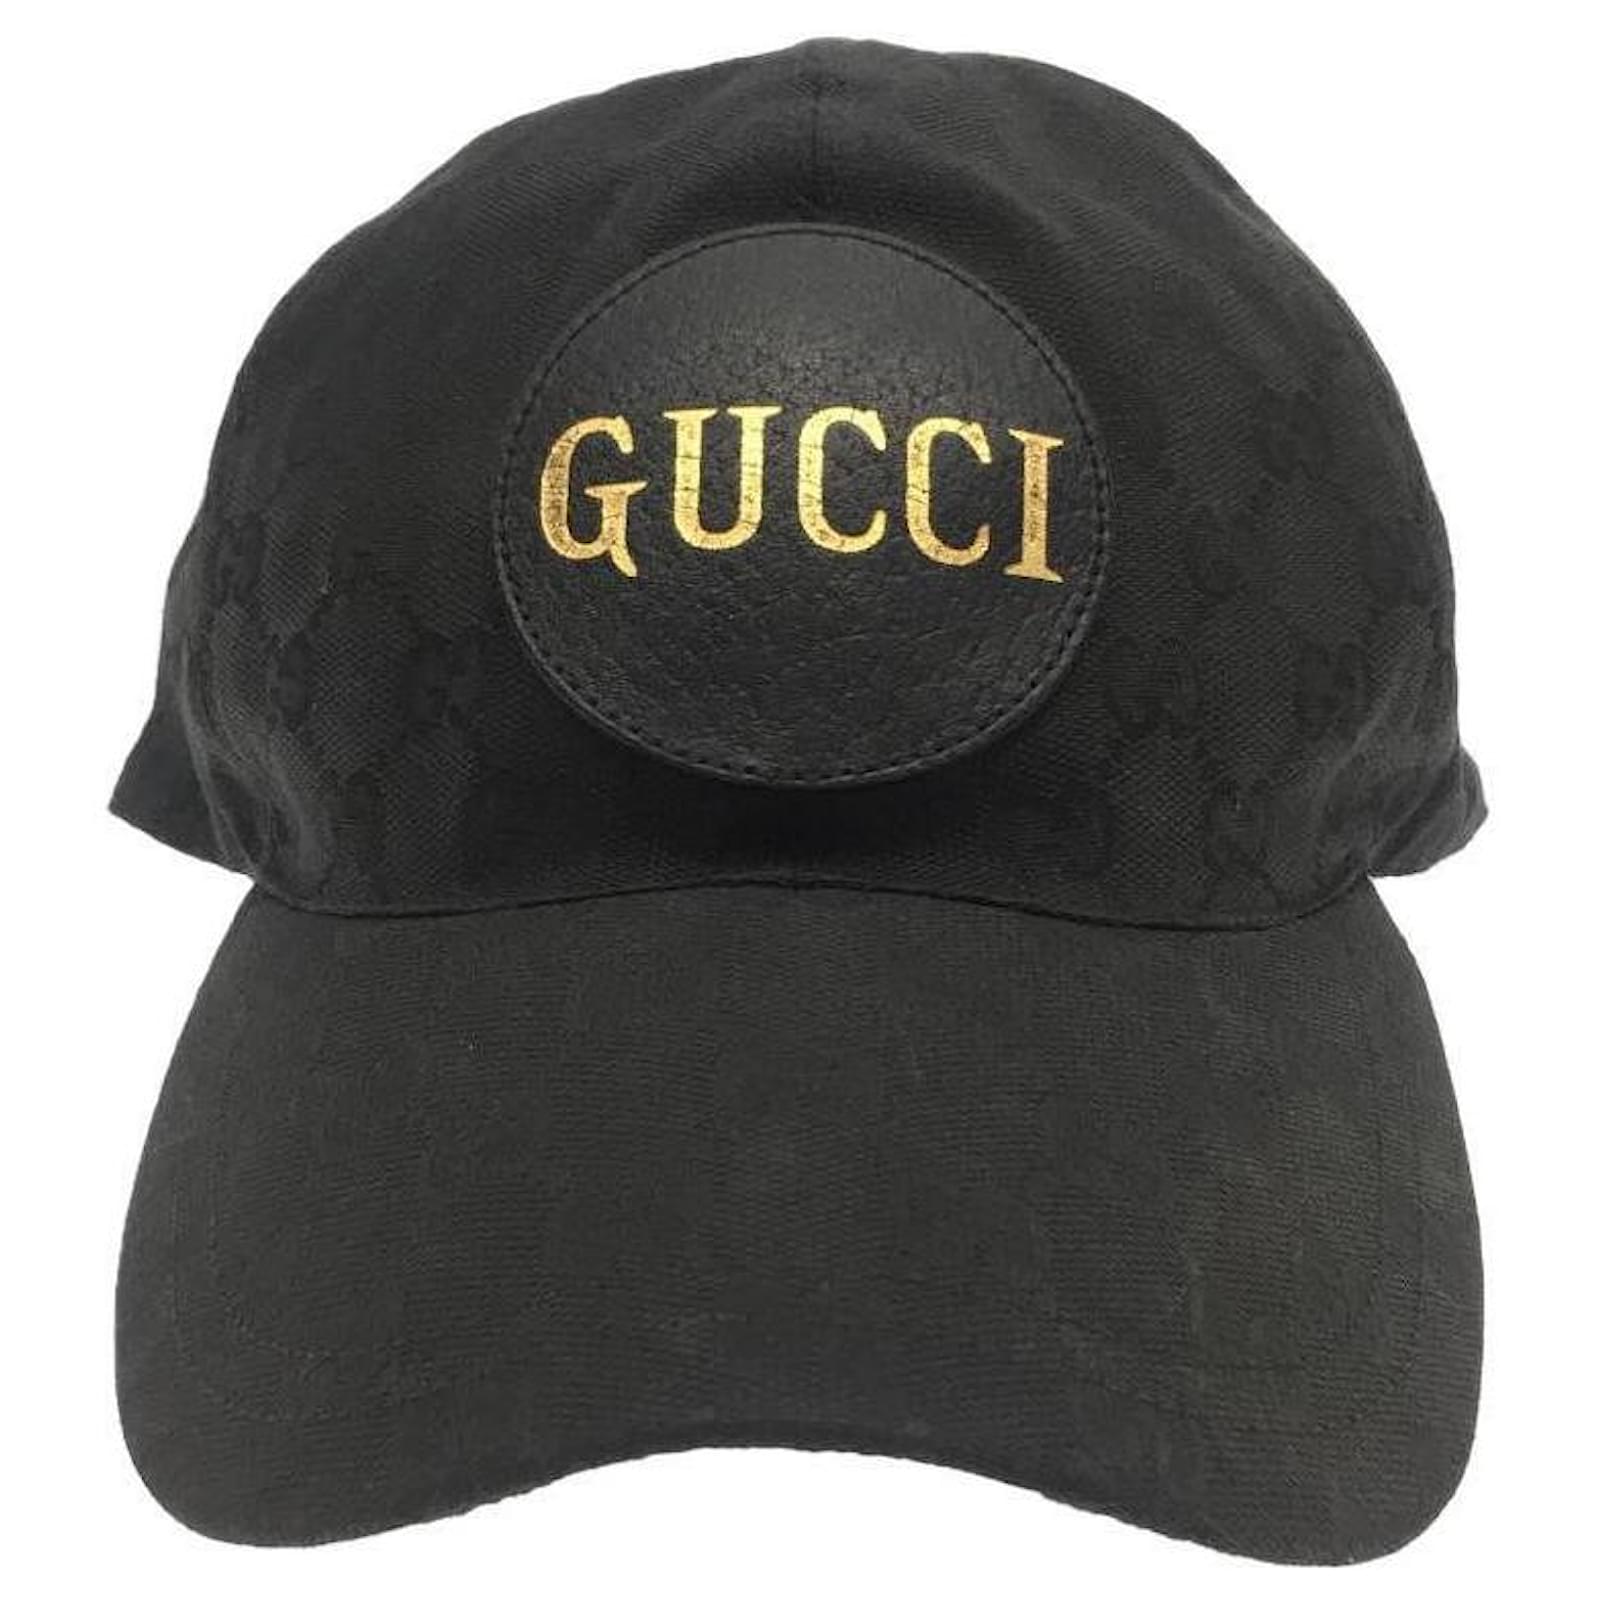 Gucci - GG Baseball Cap in Black Gucci